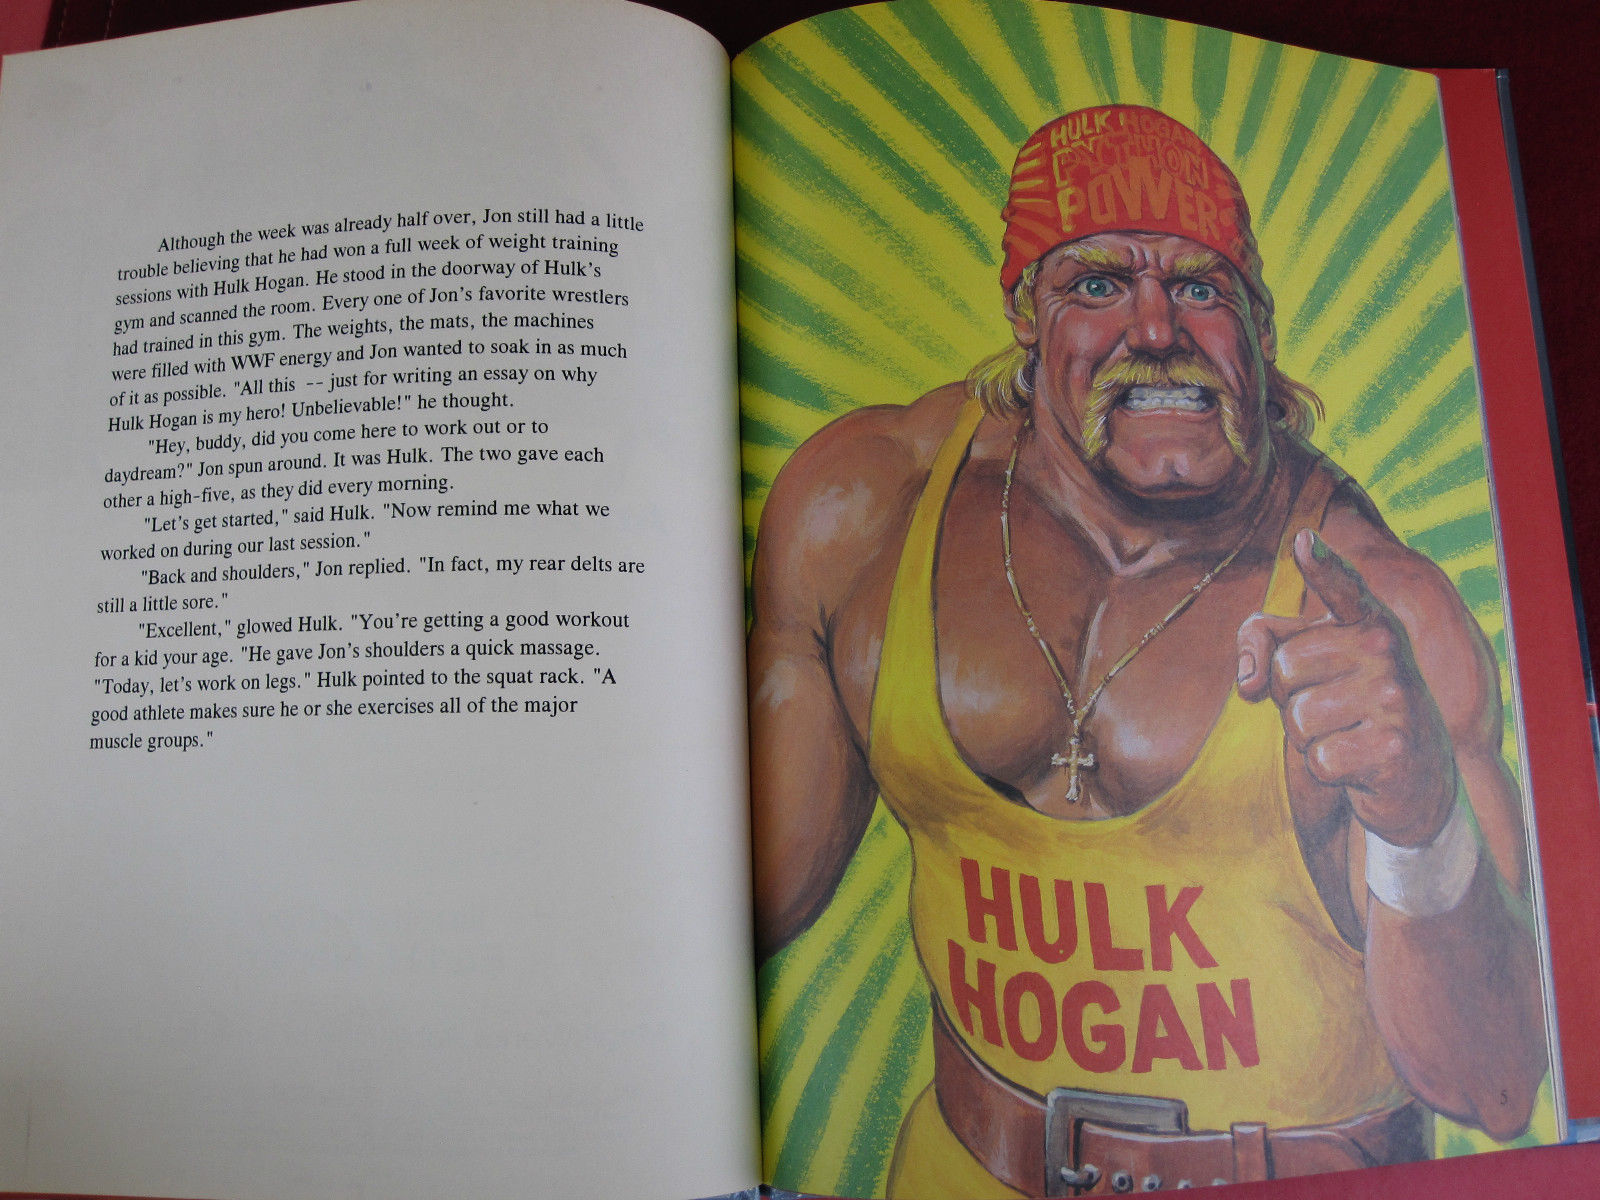 Hulk Hogan A True Champion book excerpt